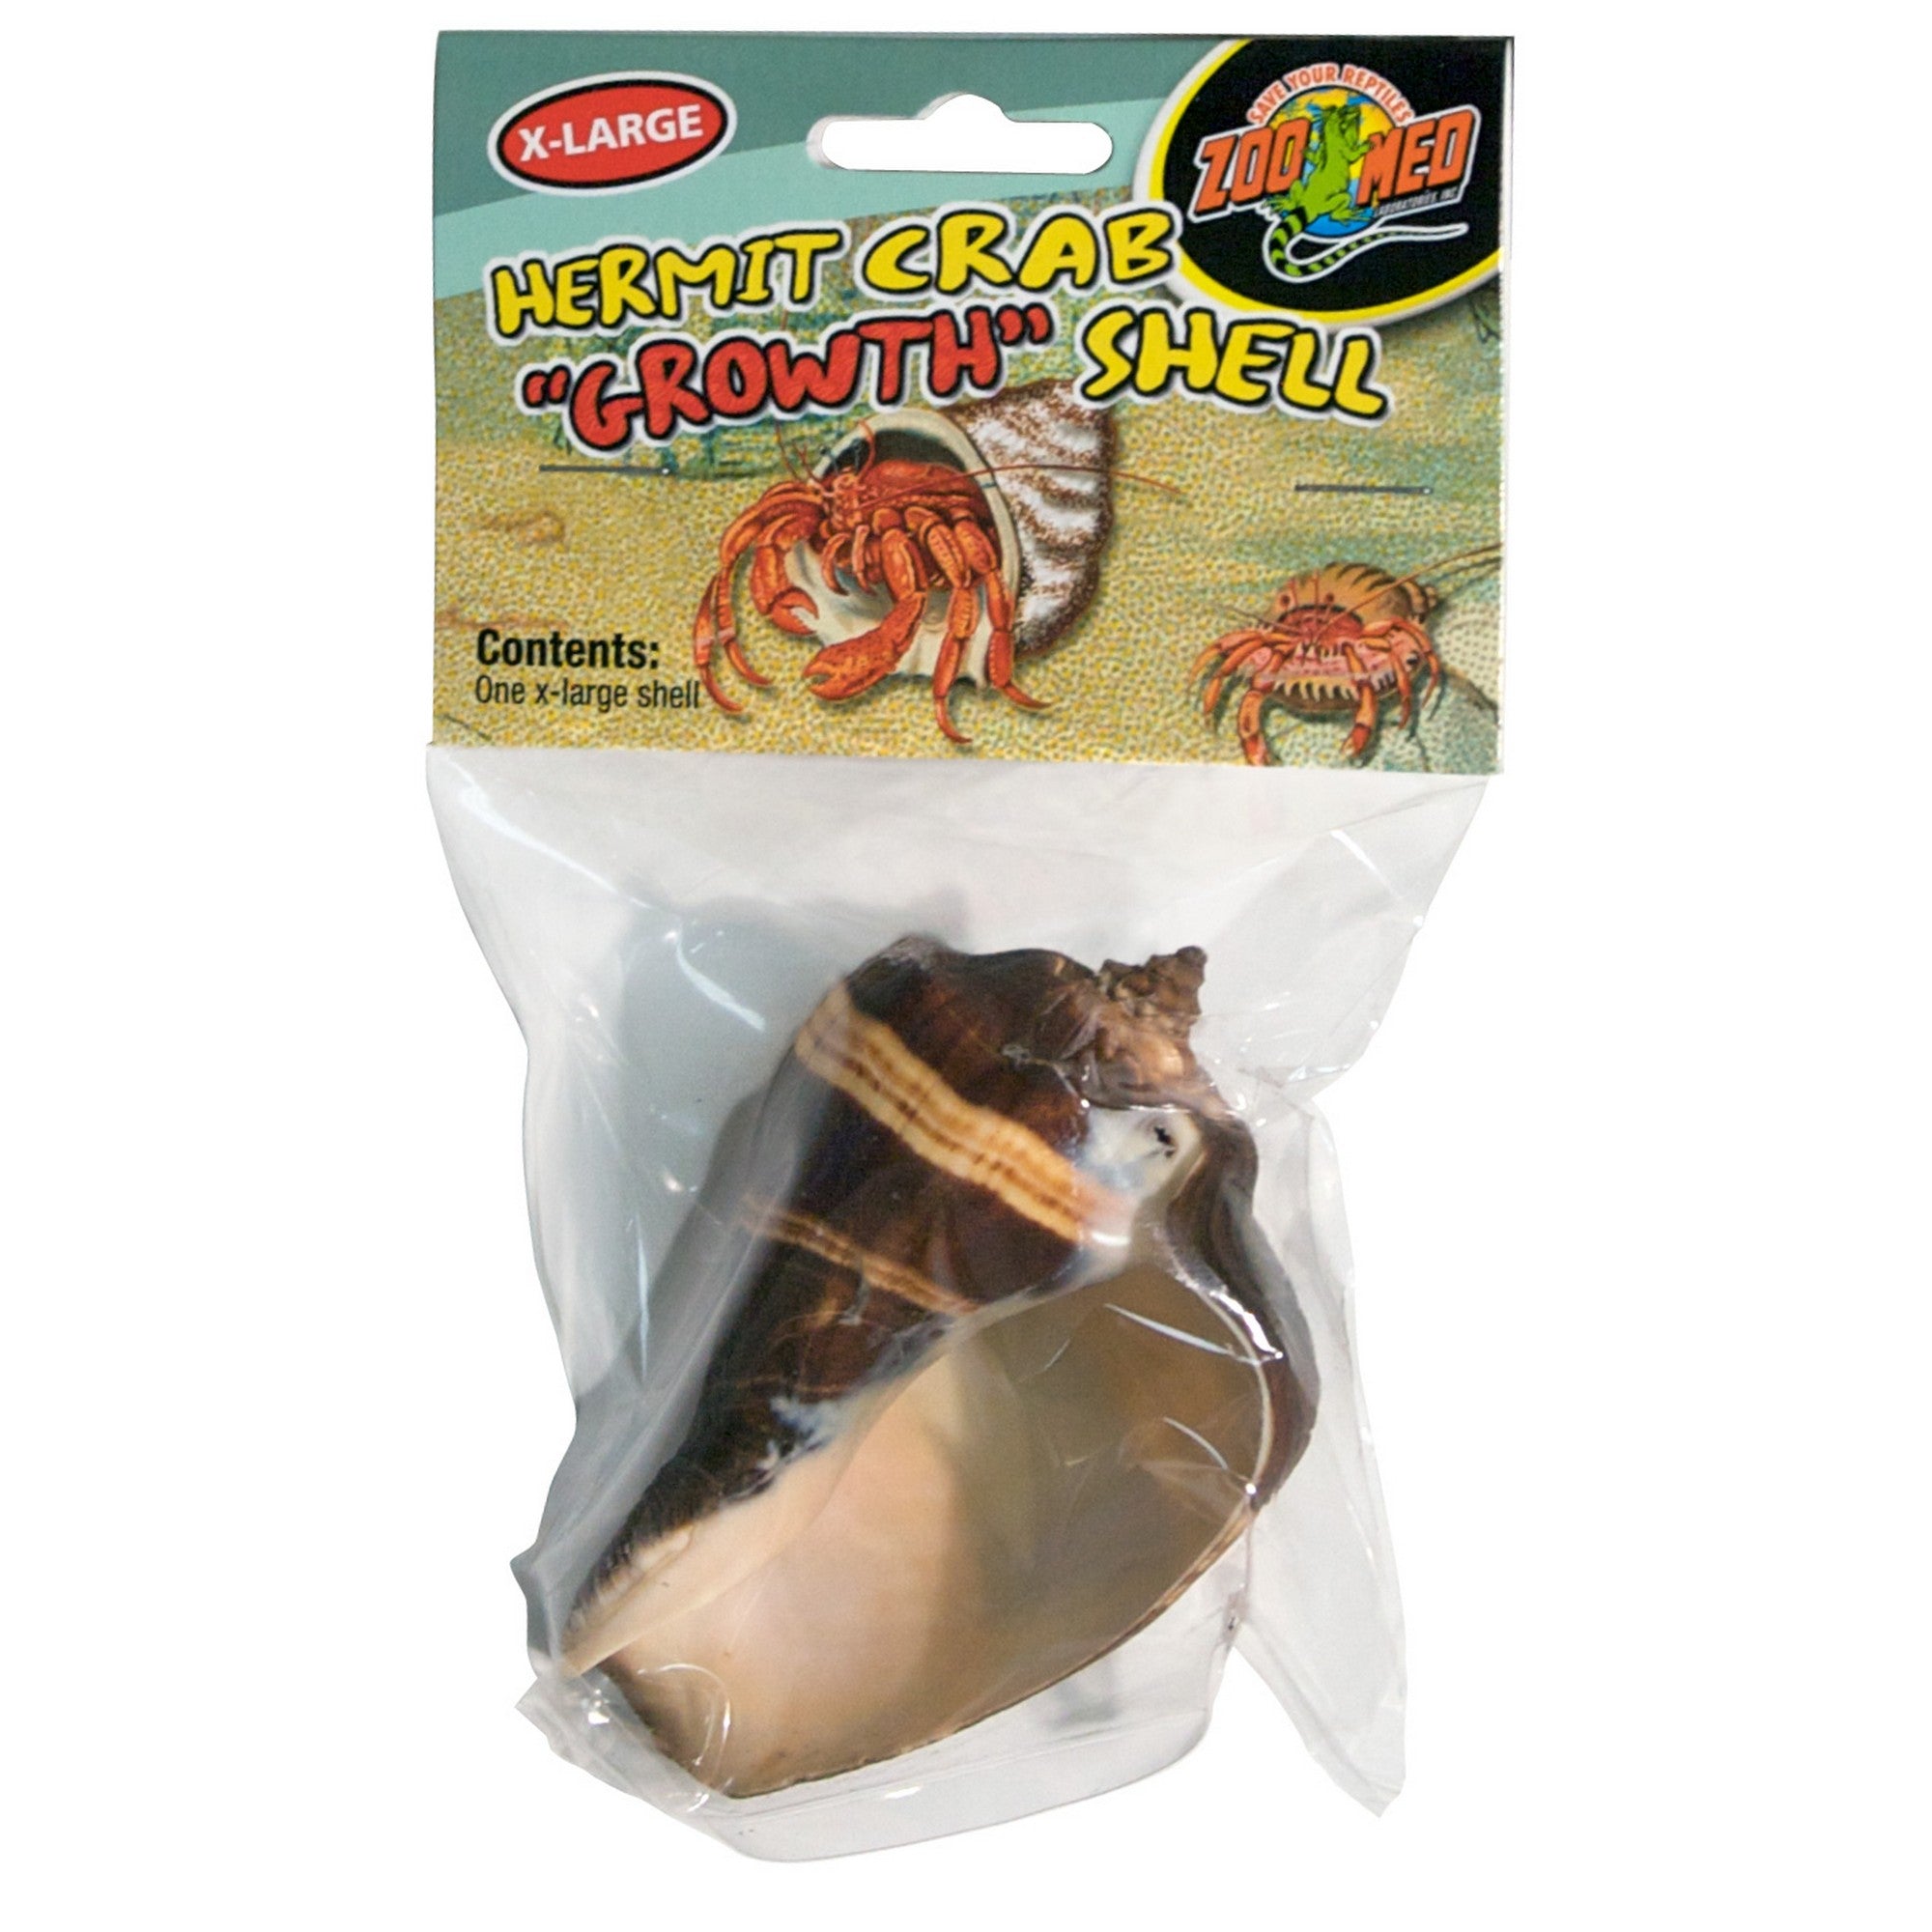 Zoo Med Hermit Crab Sea Sponges, Bulk - Chow Hound Pet Supplies